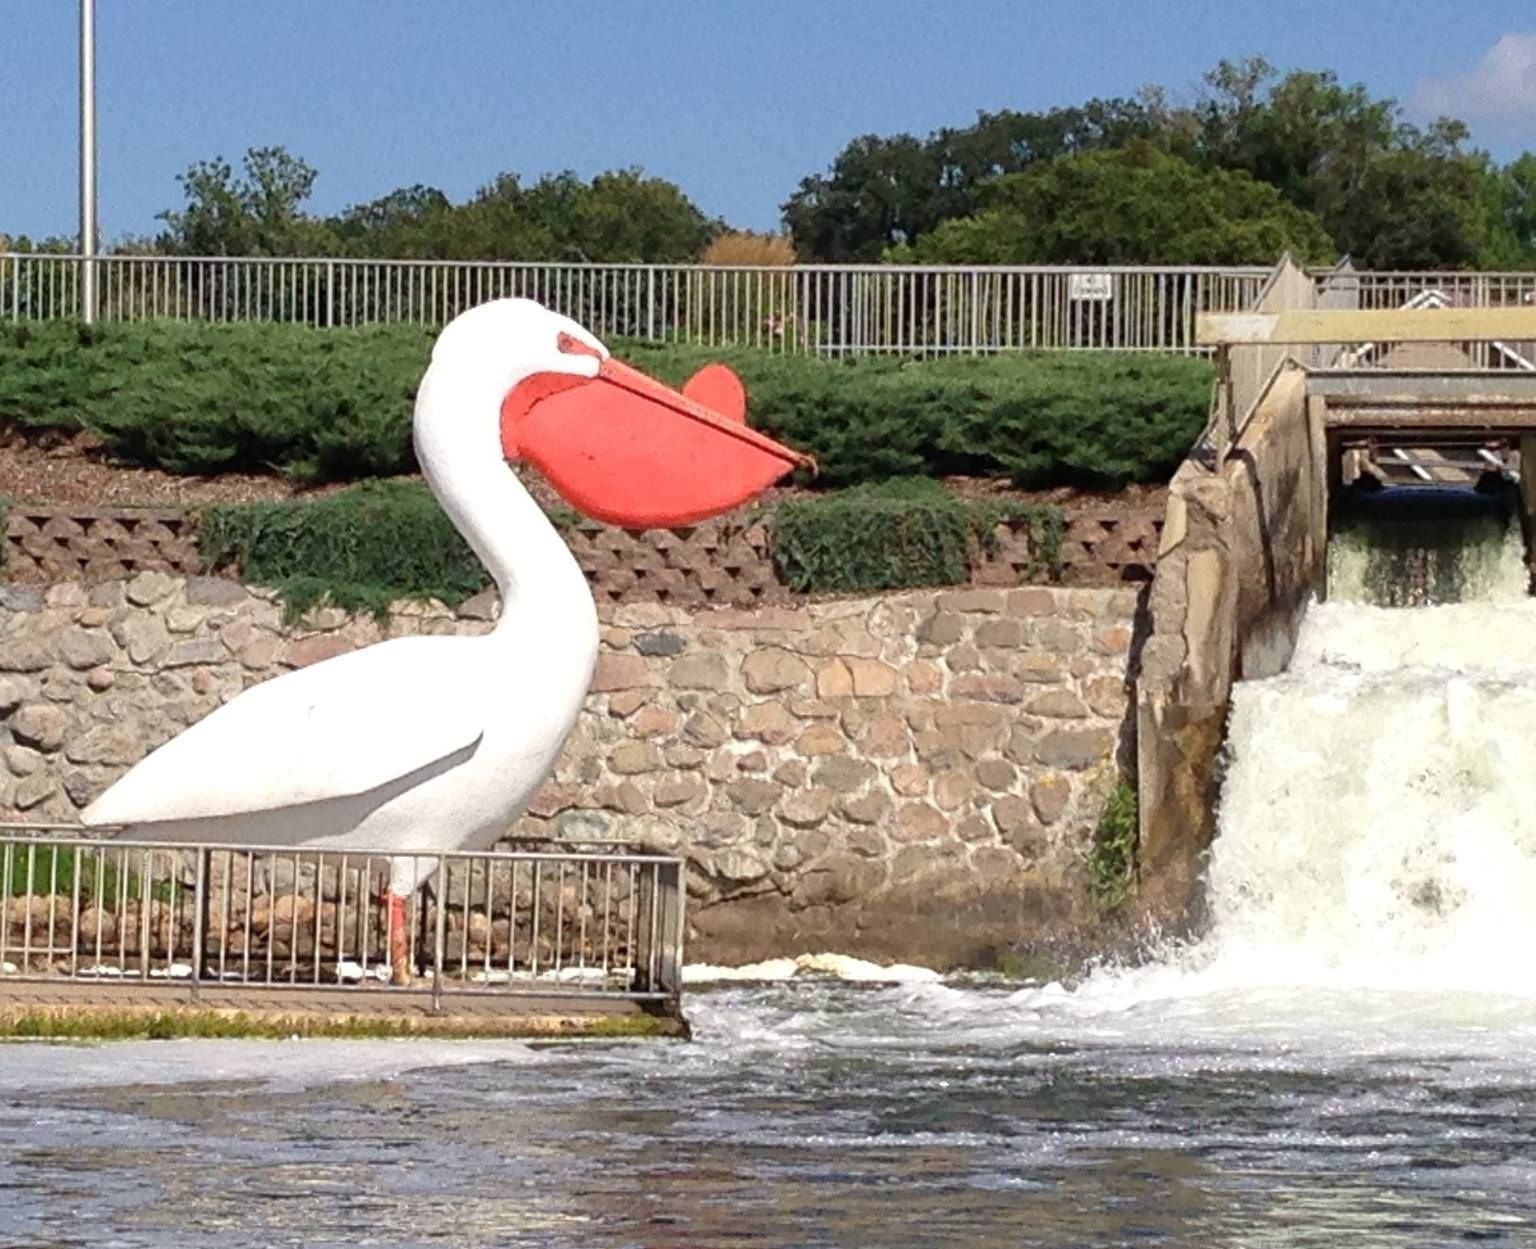 
World's Largest Pelican Sculpture, world record in Pelican Rapids, Minnesota